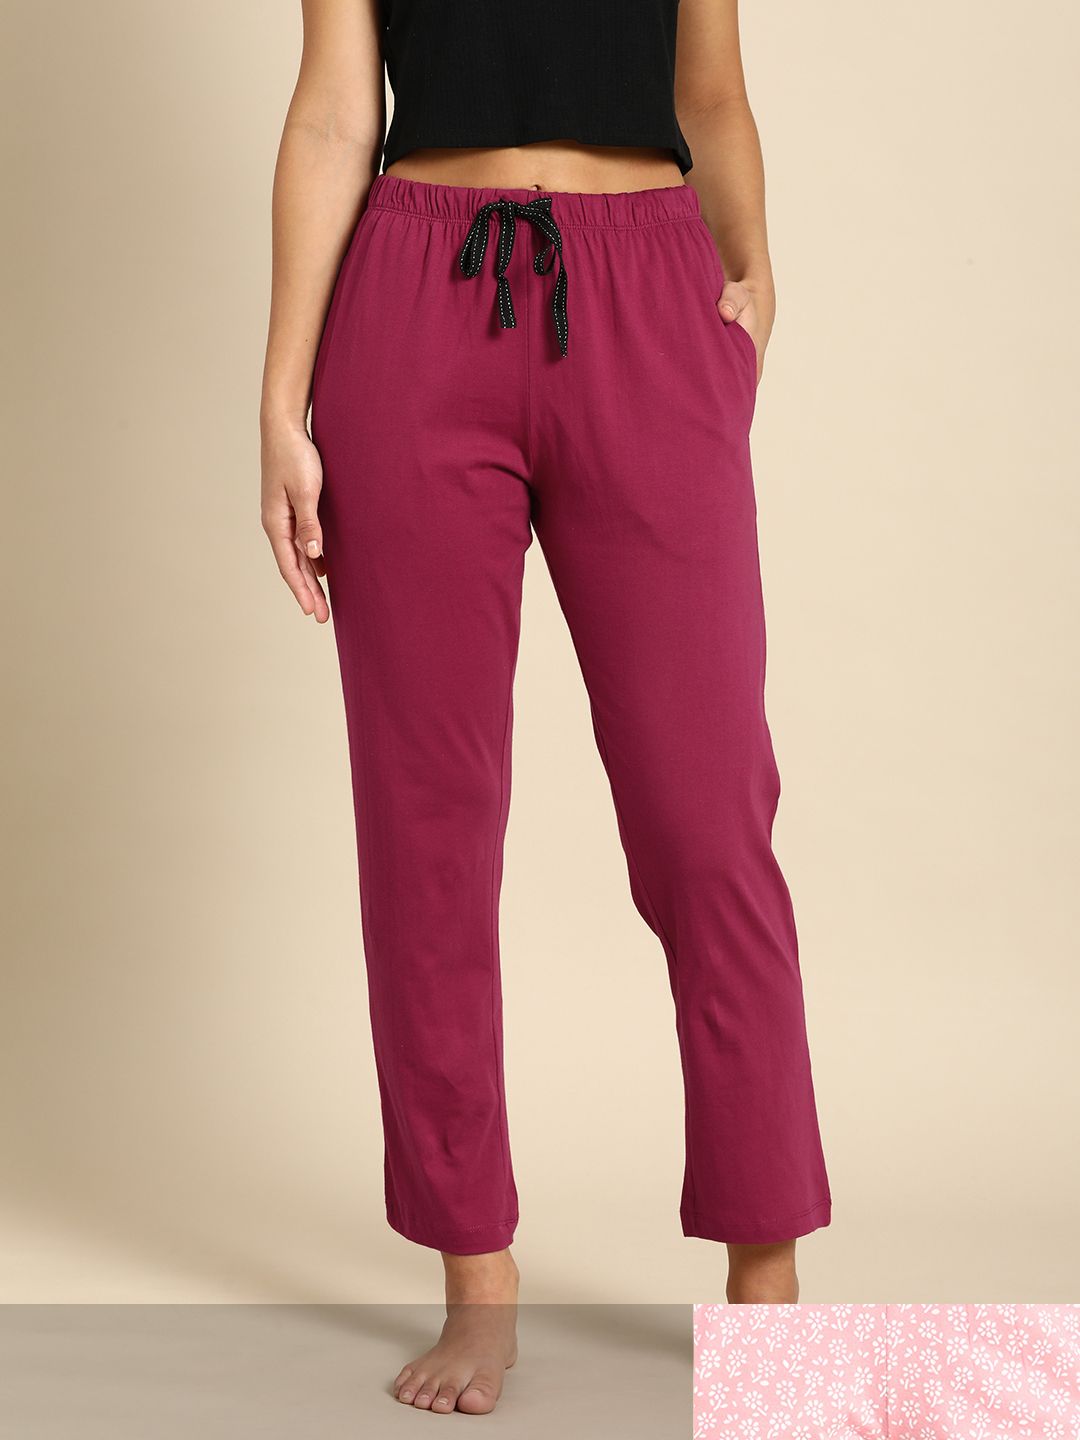 Dreamz by Pantaloons Women Set Of 2 Pink & Maroon Printed Lounge Pants Price in India